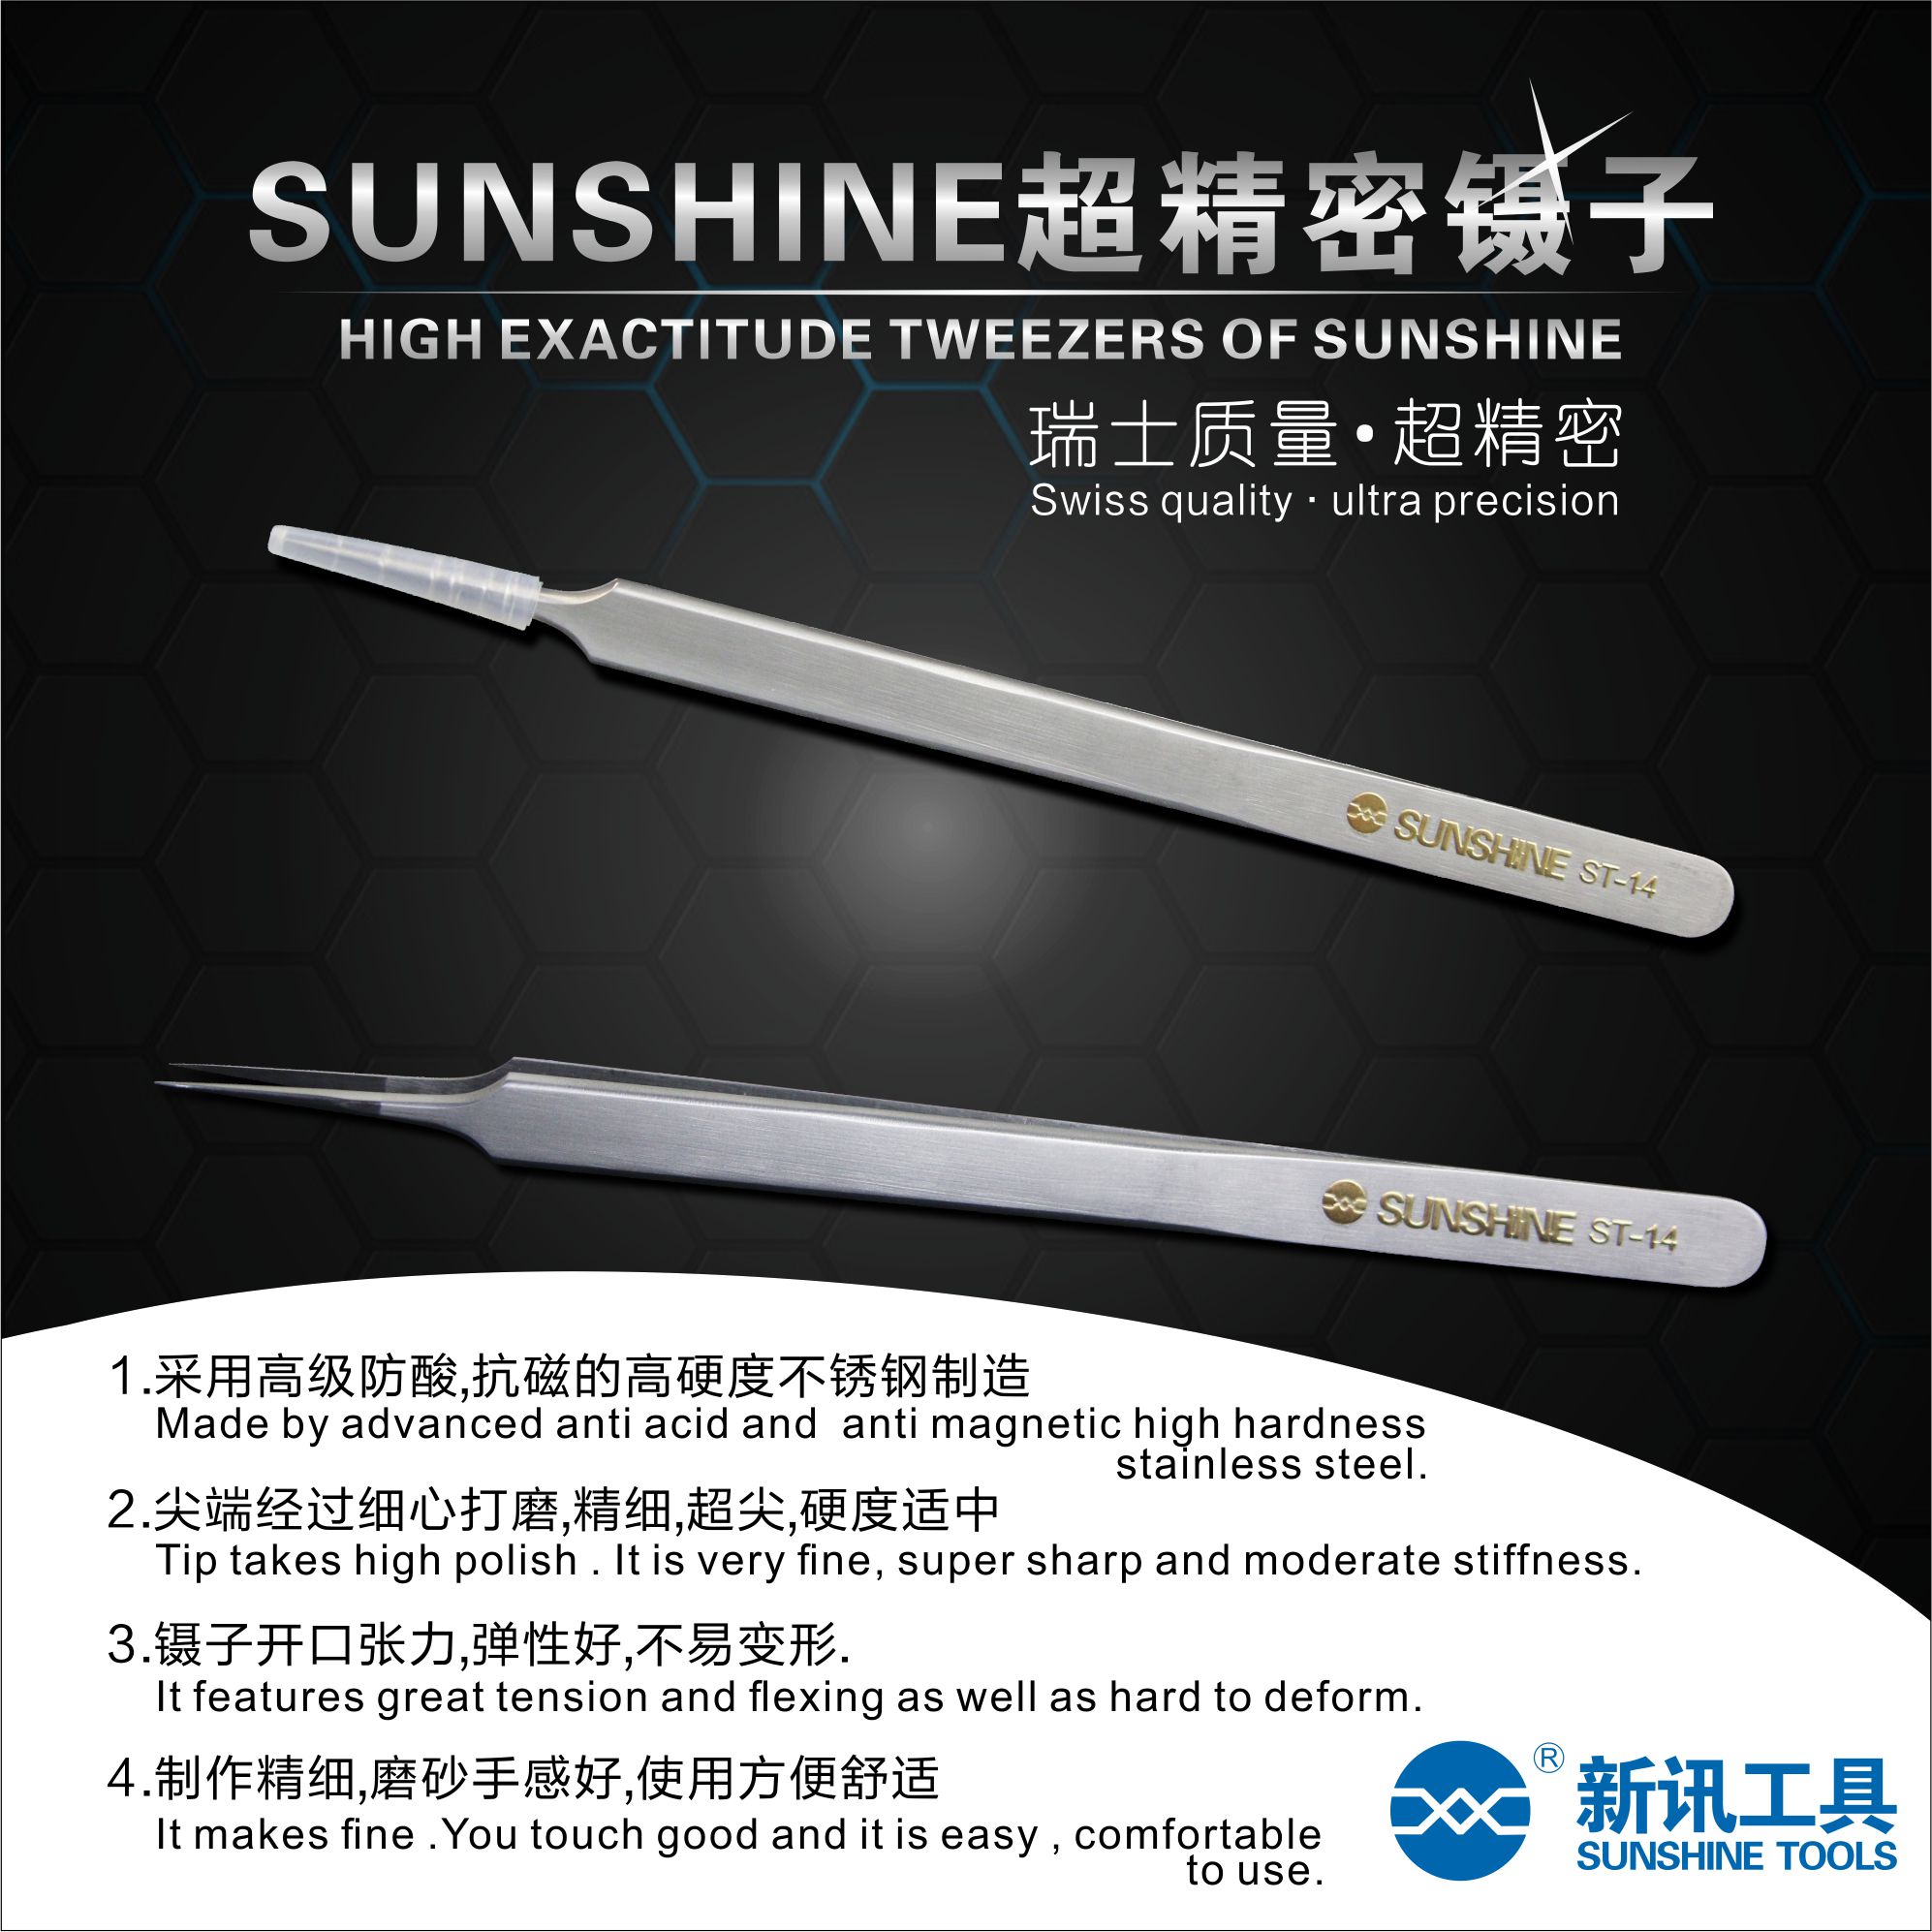 SUNSHINE ST-14 Precision Tweezer sunshine ST-14 Precision Tweezer